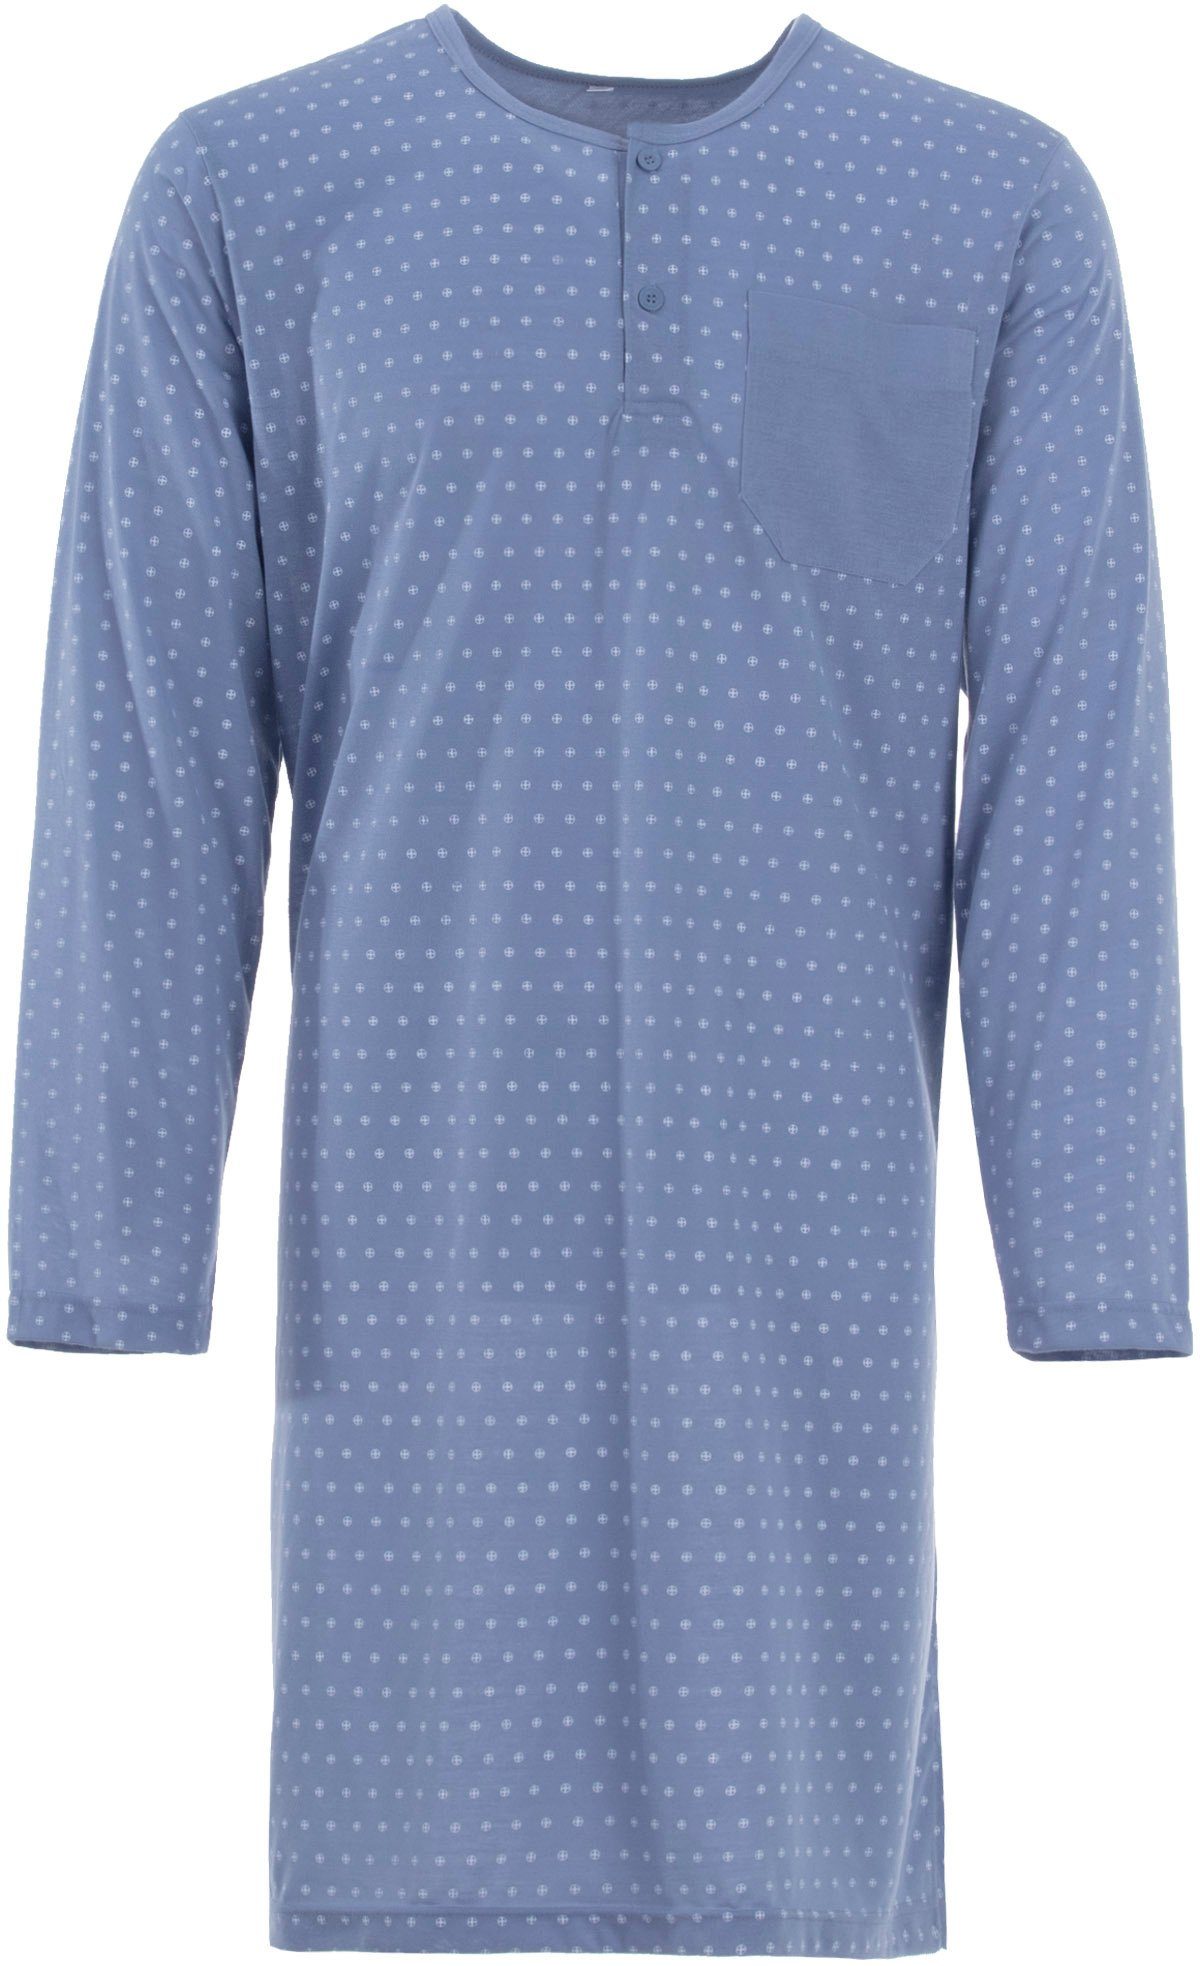 Henry Terre Nachthemd Nachthemd Langarm Ball - graublau